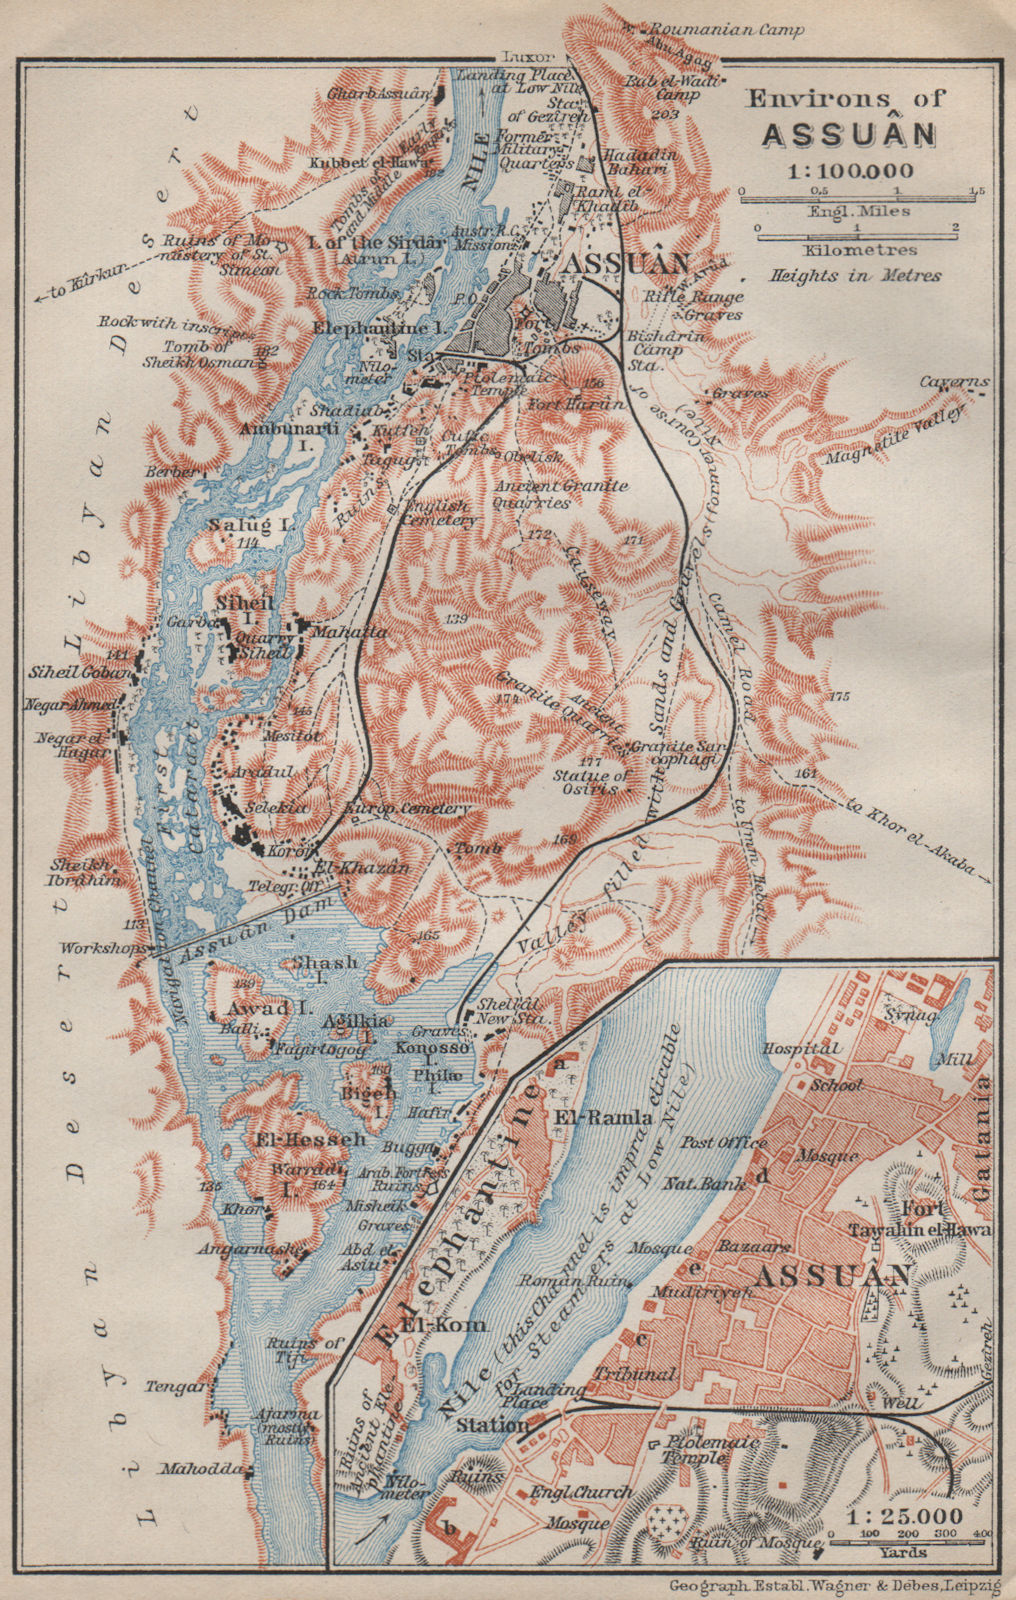 ASWAN ENVIRONS and antique town city plan. Assuan. Egypt. BAEDEKER 1914 map